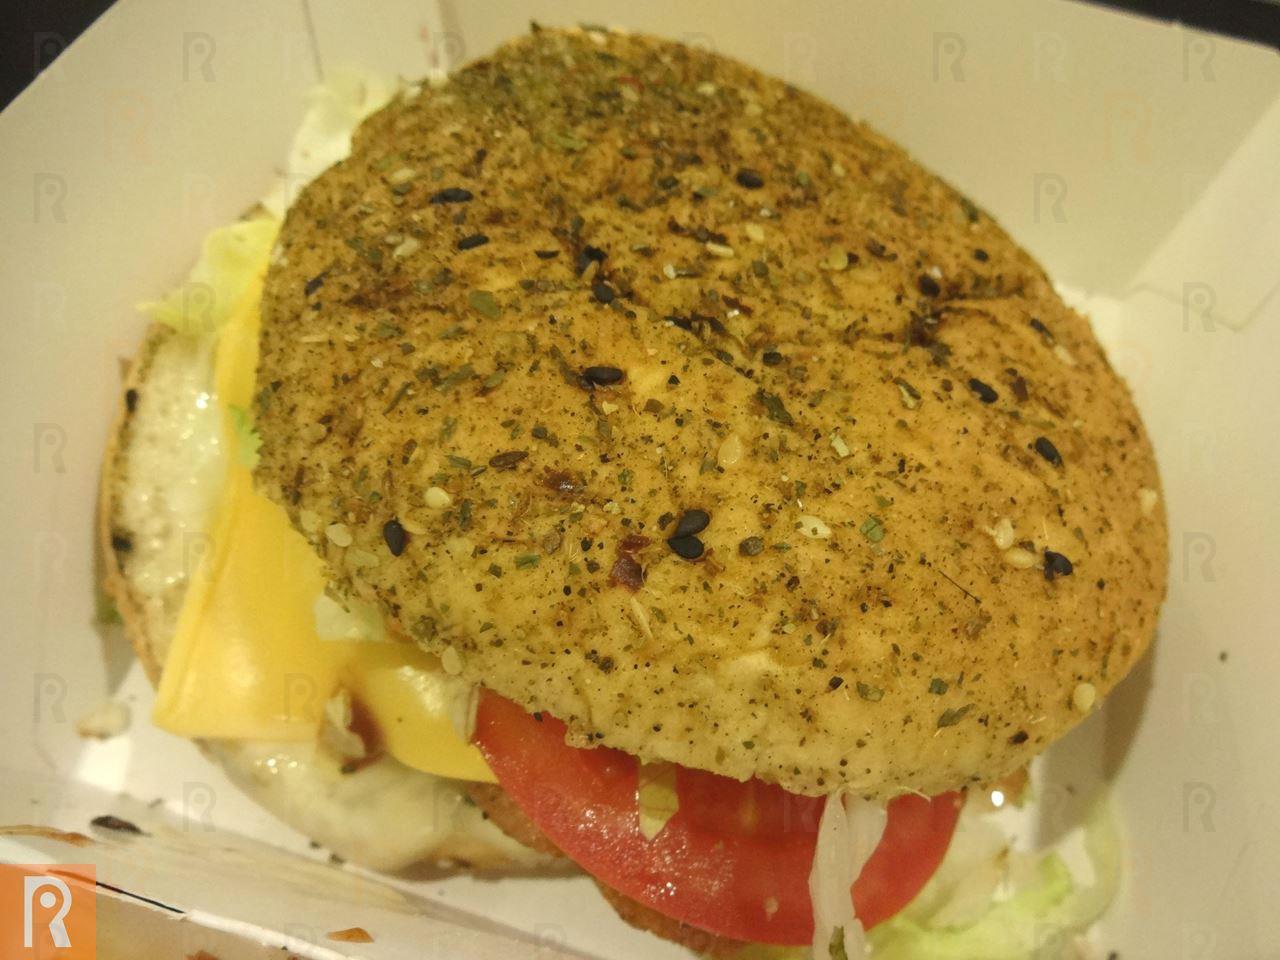 See what Kentucky's Fillet Gourmet sandwich looks like